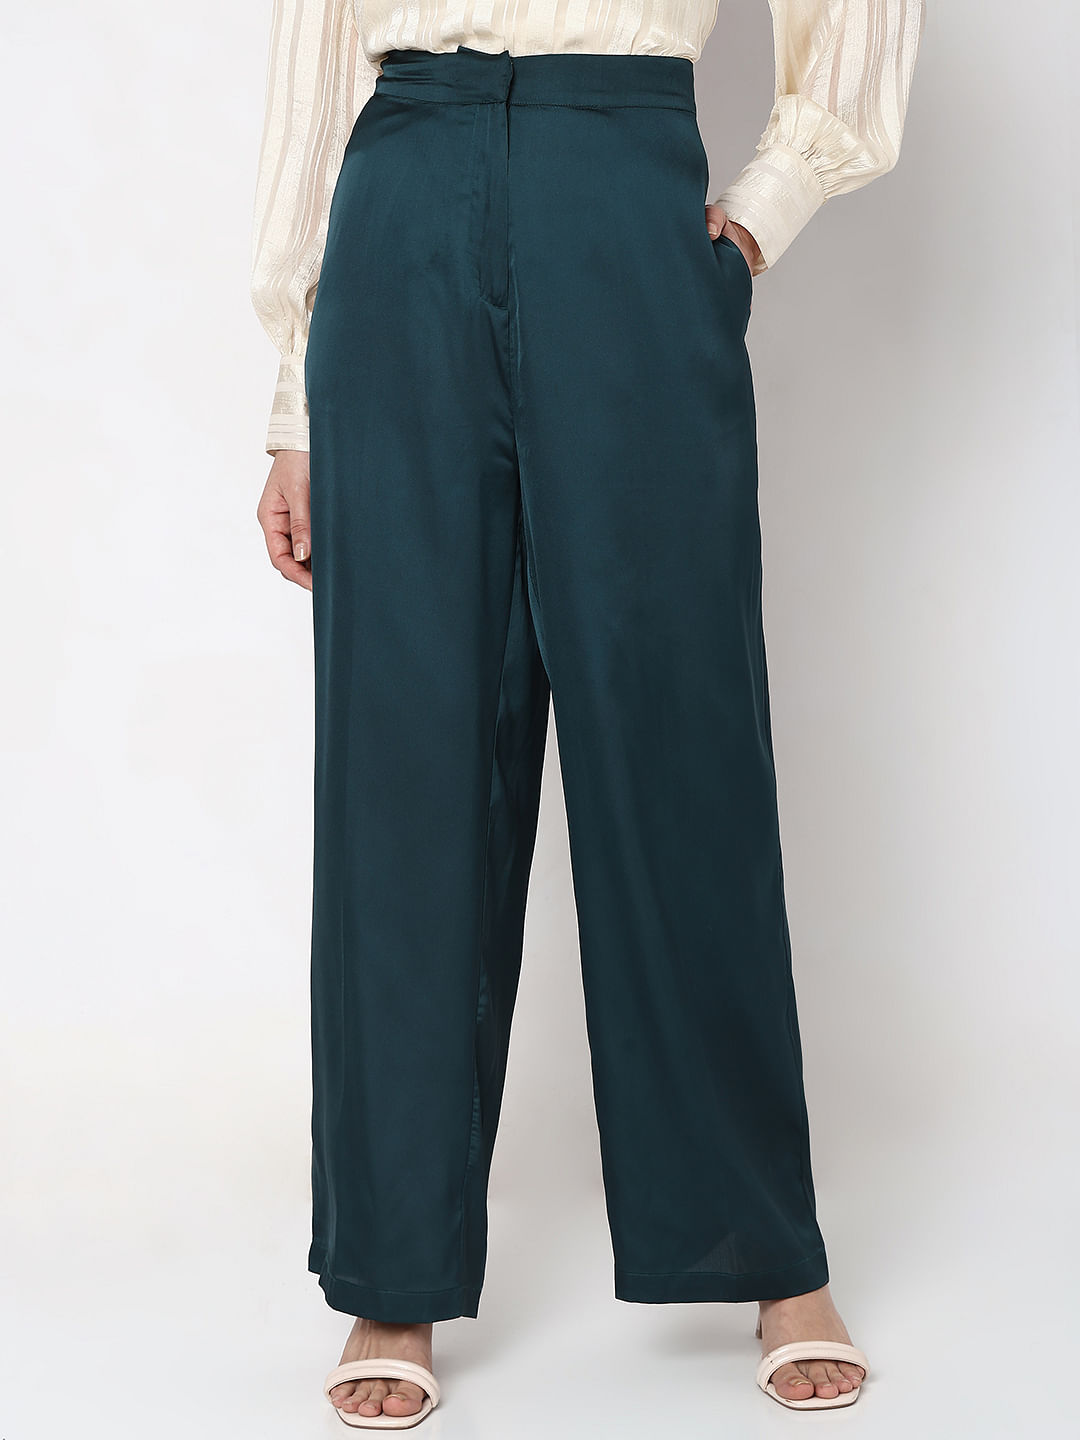 Soft Green Pure Satin Silk Halter Top and Pants Co-ord Set - Tilfi